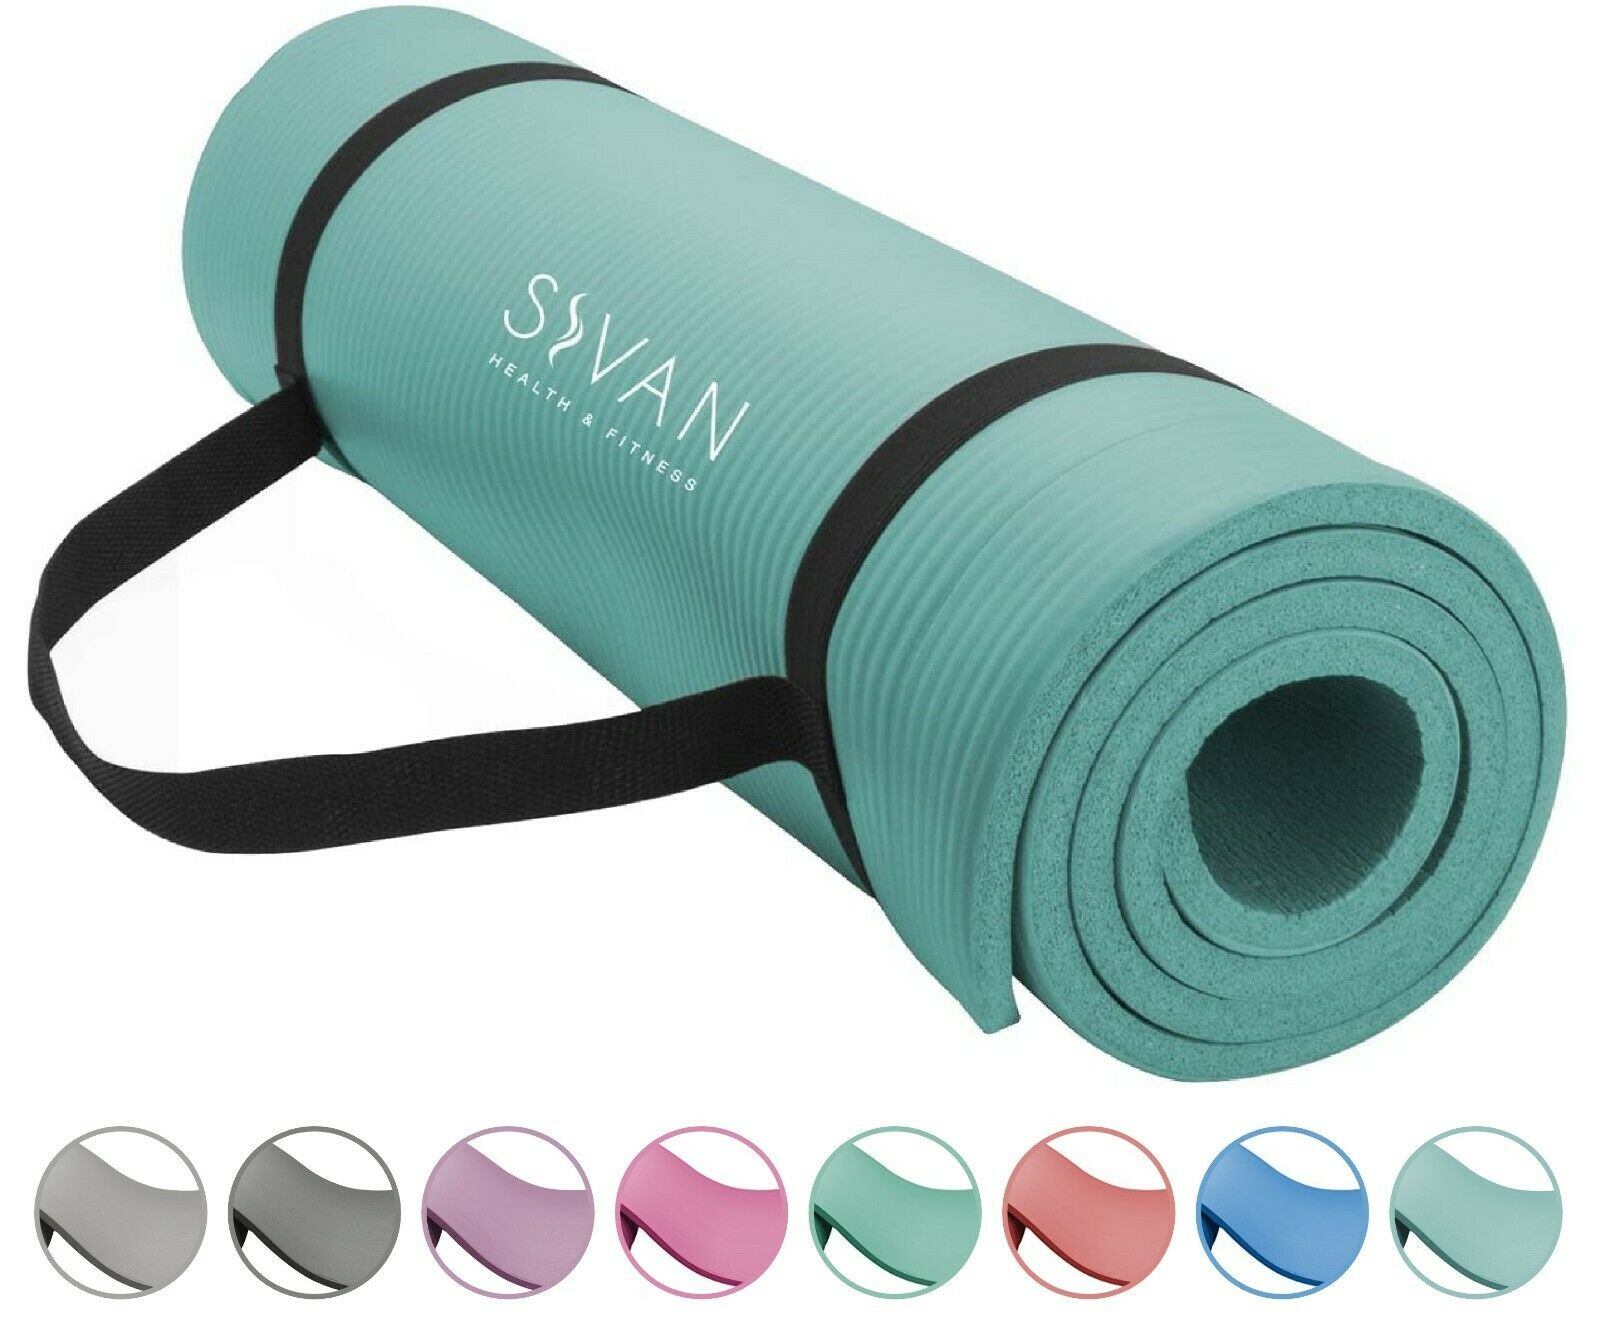 Sivan Health & Fitness Yoga Mat - 1/2" Thick, 71" Inch Long - Nbr Comfort Foam